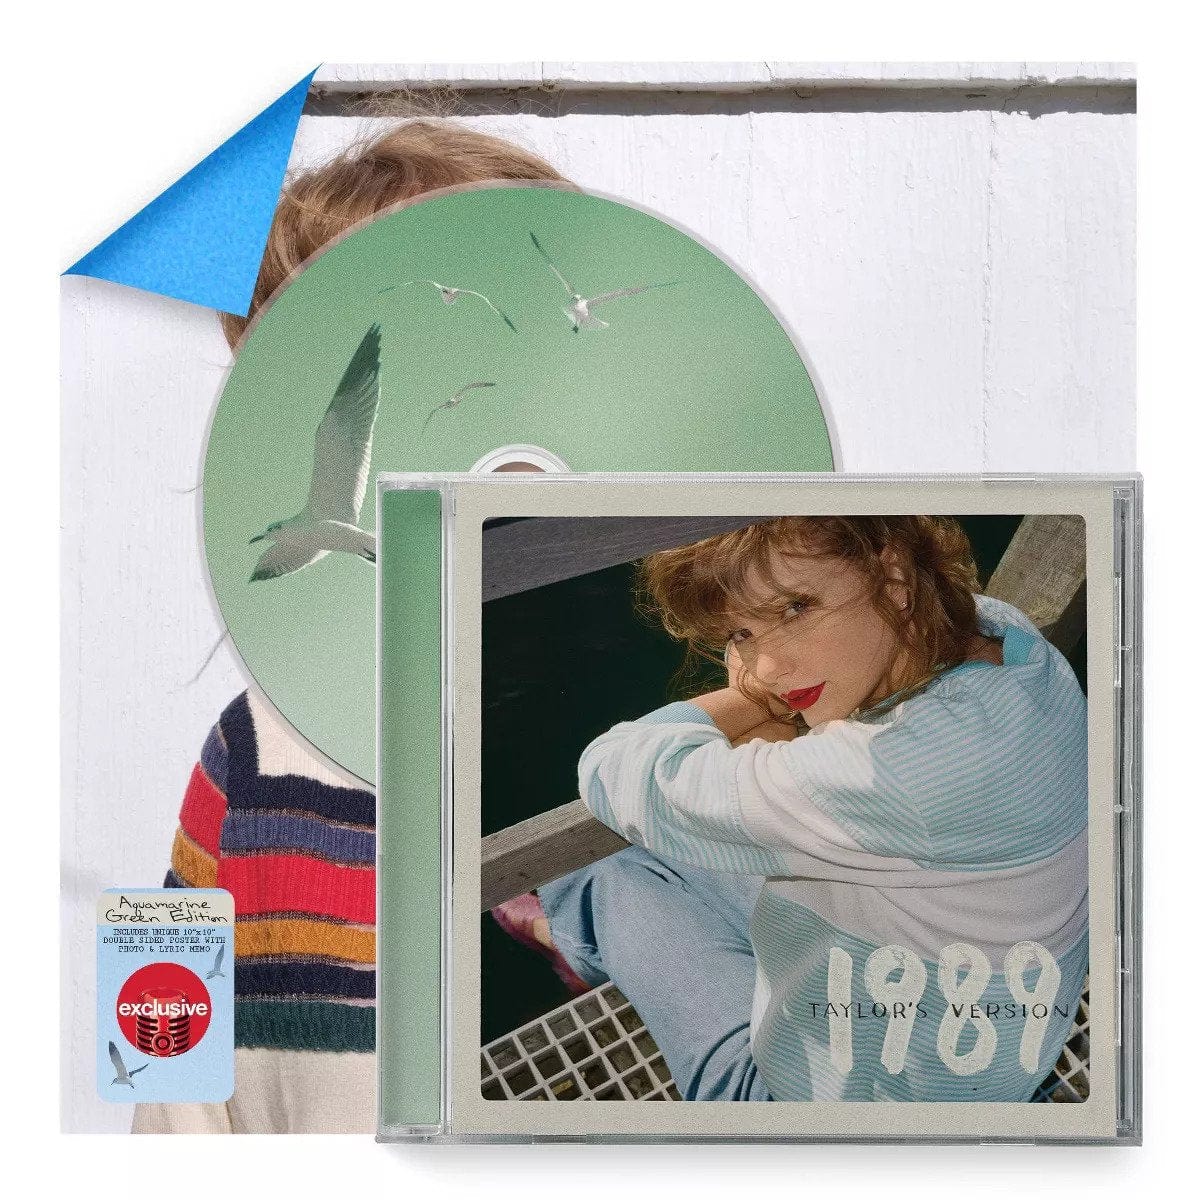 1989 (Taylor's Version) (Aquamarine Green CD) - Taylor Swift [CD] – Golden  Discs